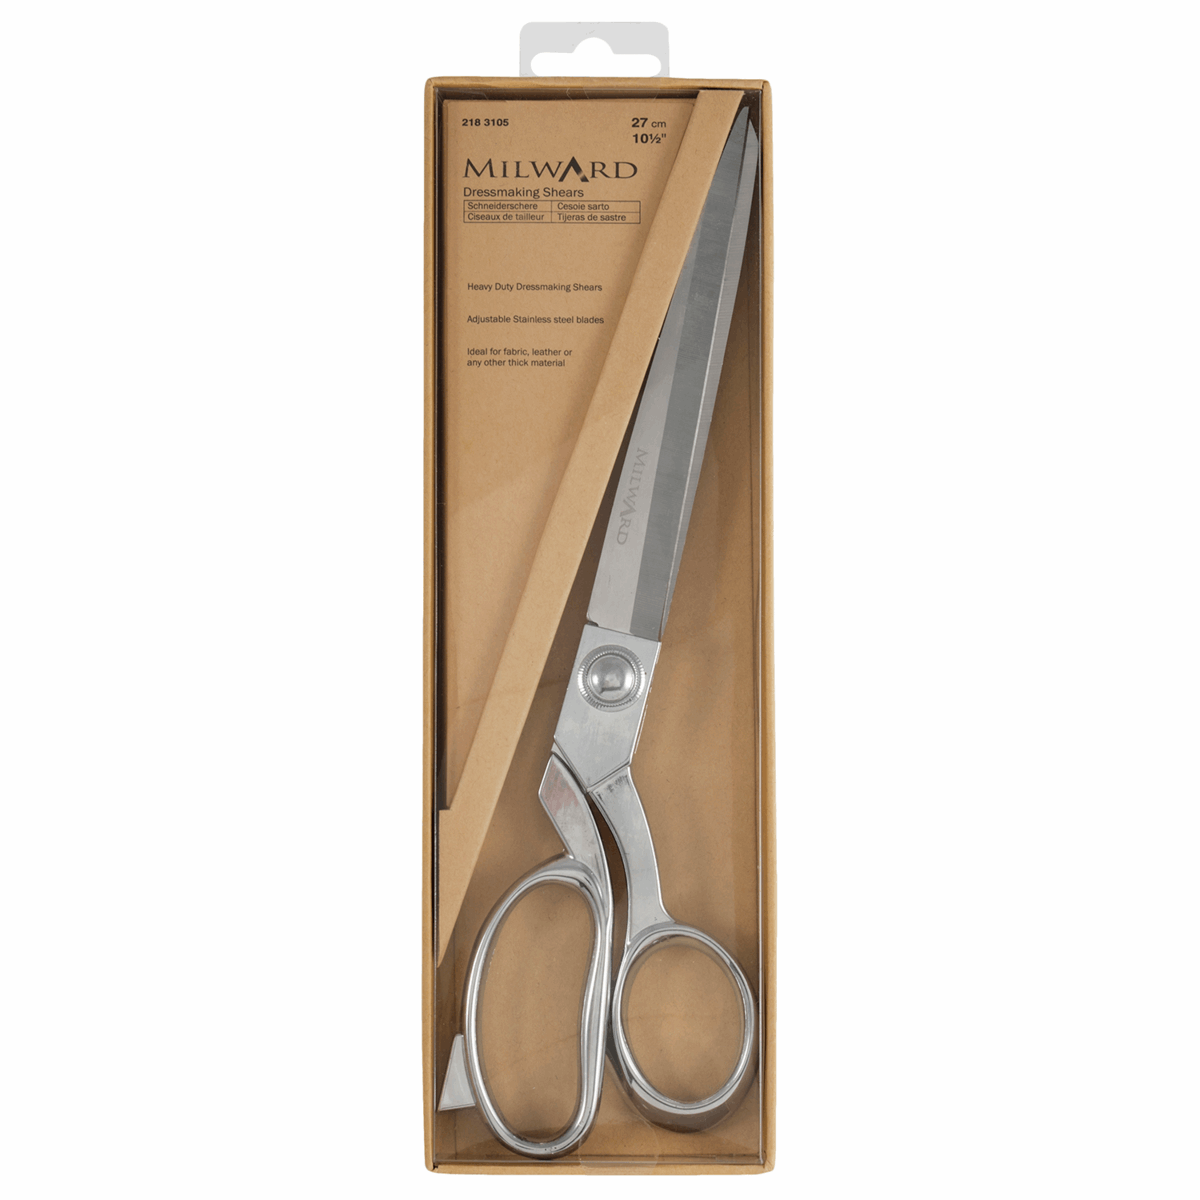 Milward Scissors - Professional Dressmaking Shears - Large 27cm / 10.5in